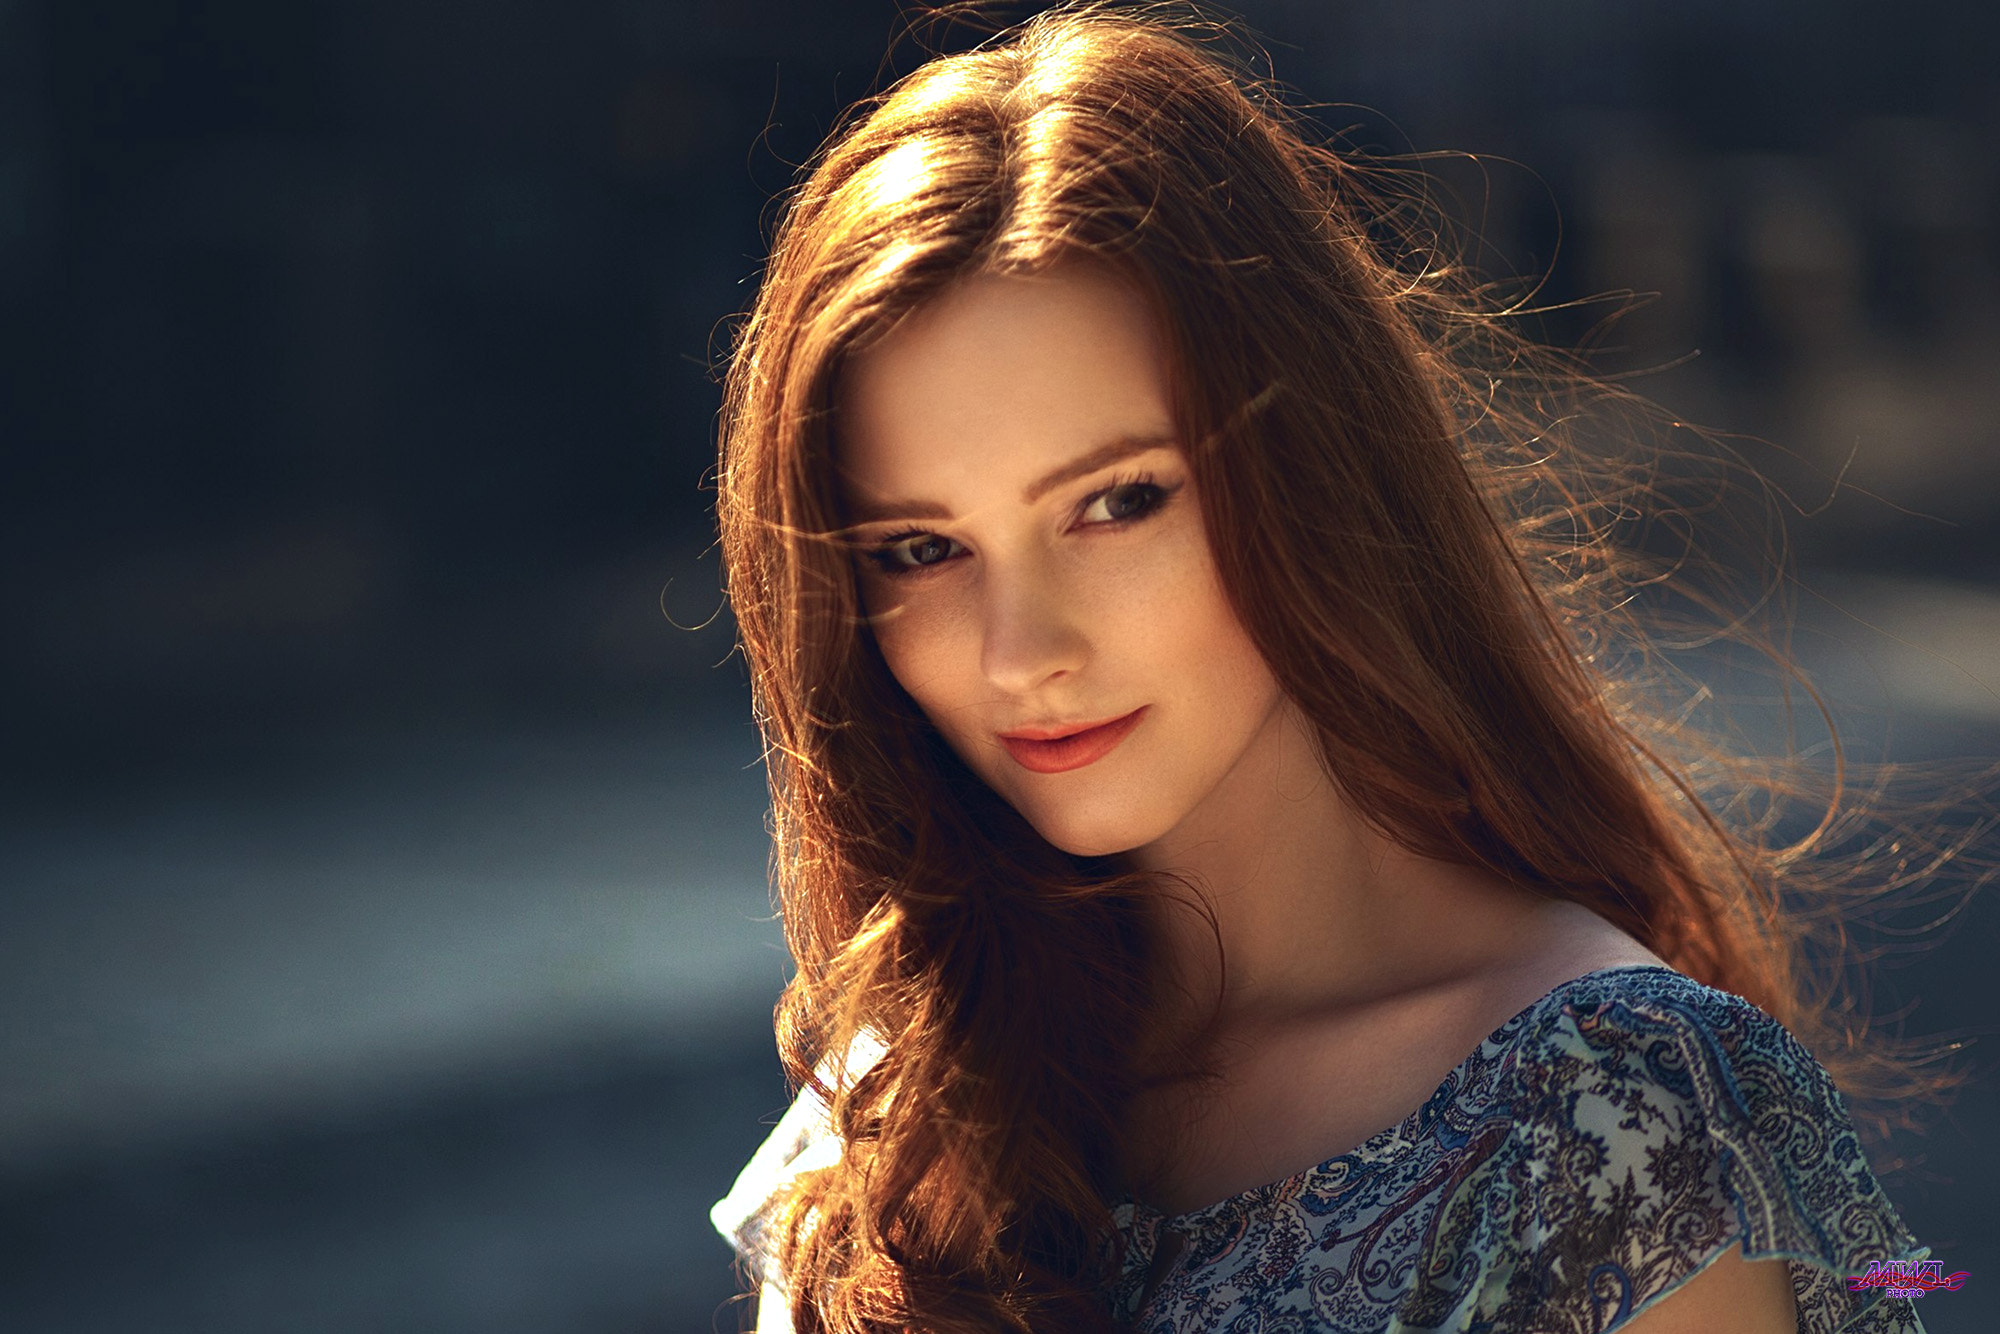 Women Smiling Long Hair MWL Photo Portrait Face Red Lipstick 500px Model Sunlight Alexandra Girskaya 2000x1334